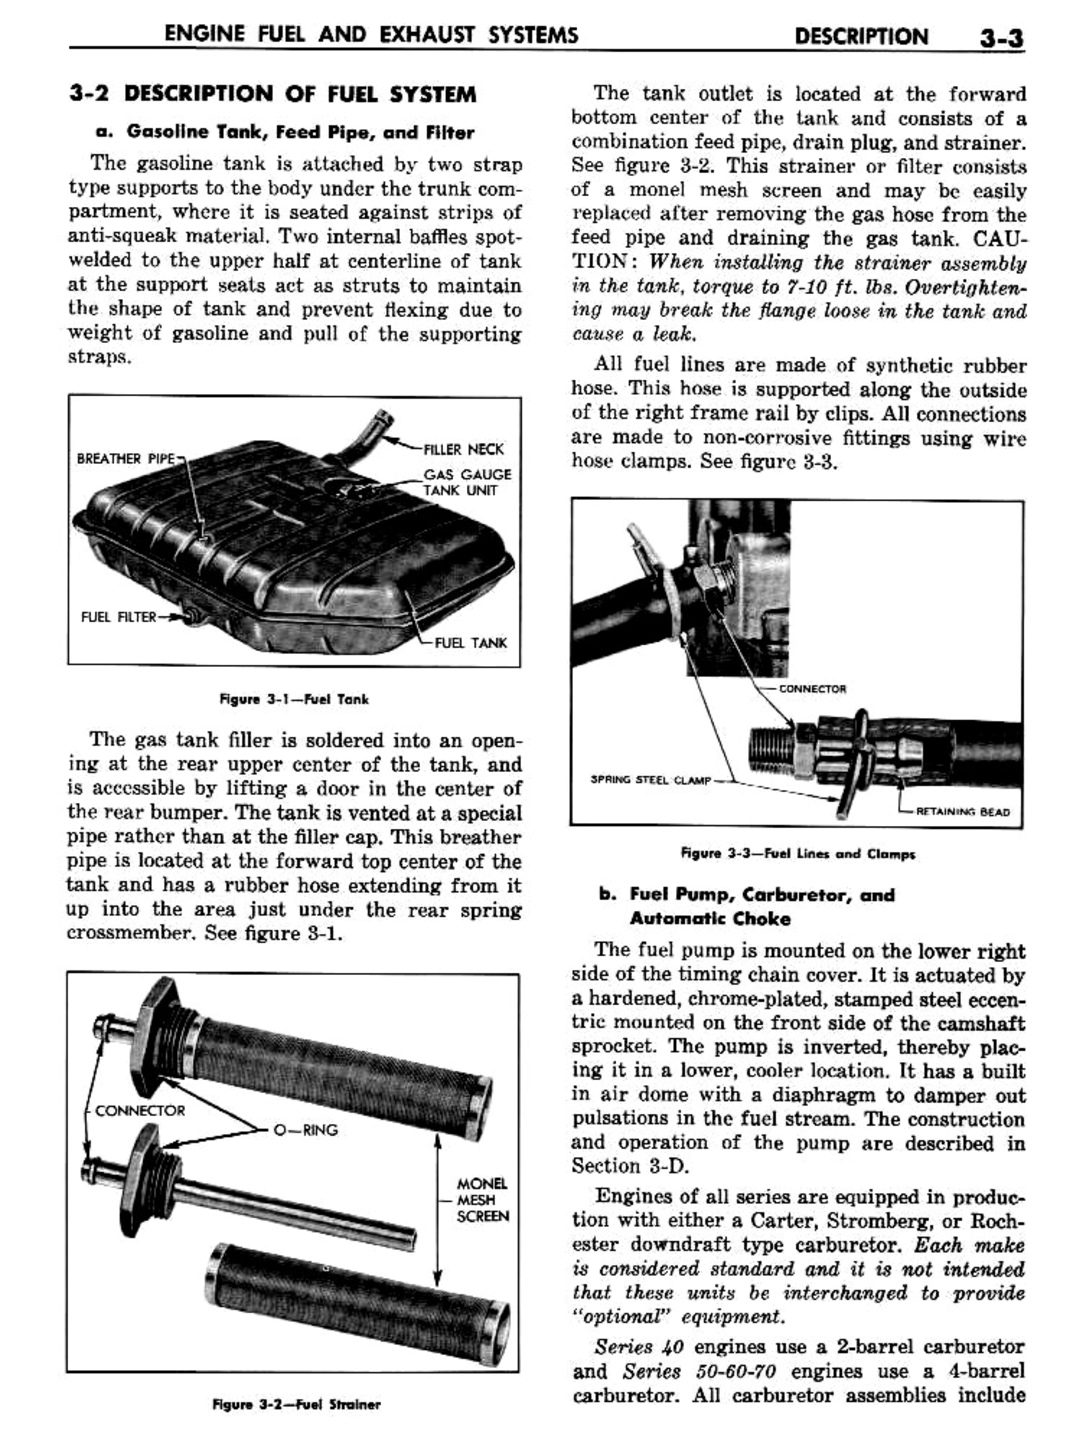 n_04 1957 Buick Shop Manual - Engine Fuel & Exhaust-003-003.jpg